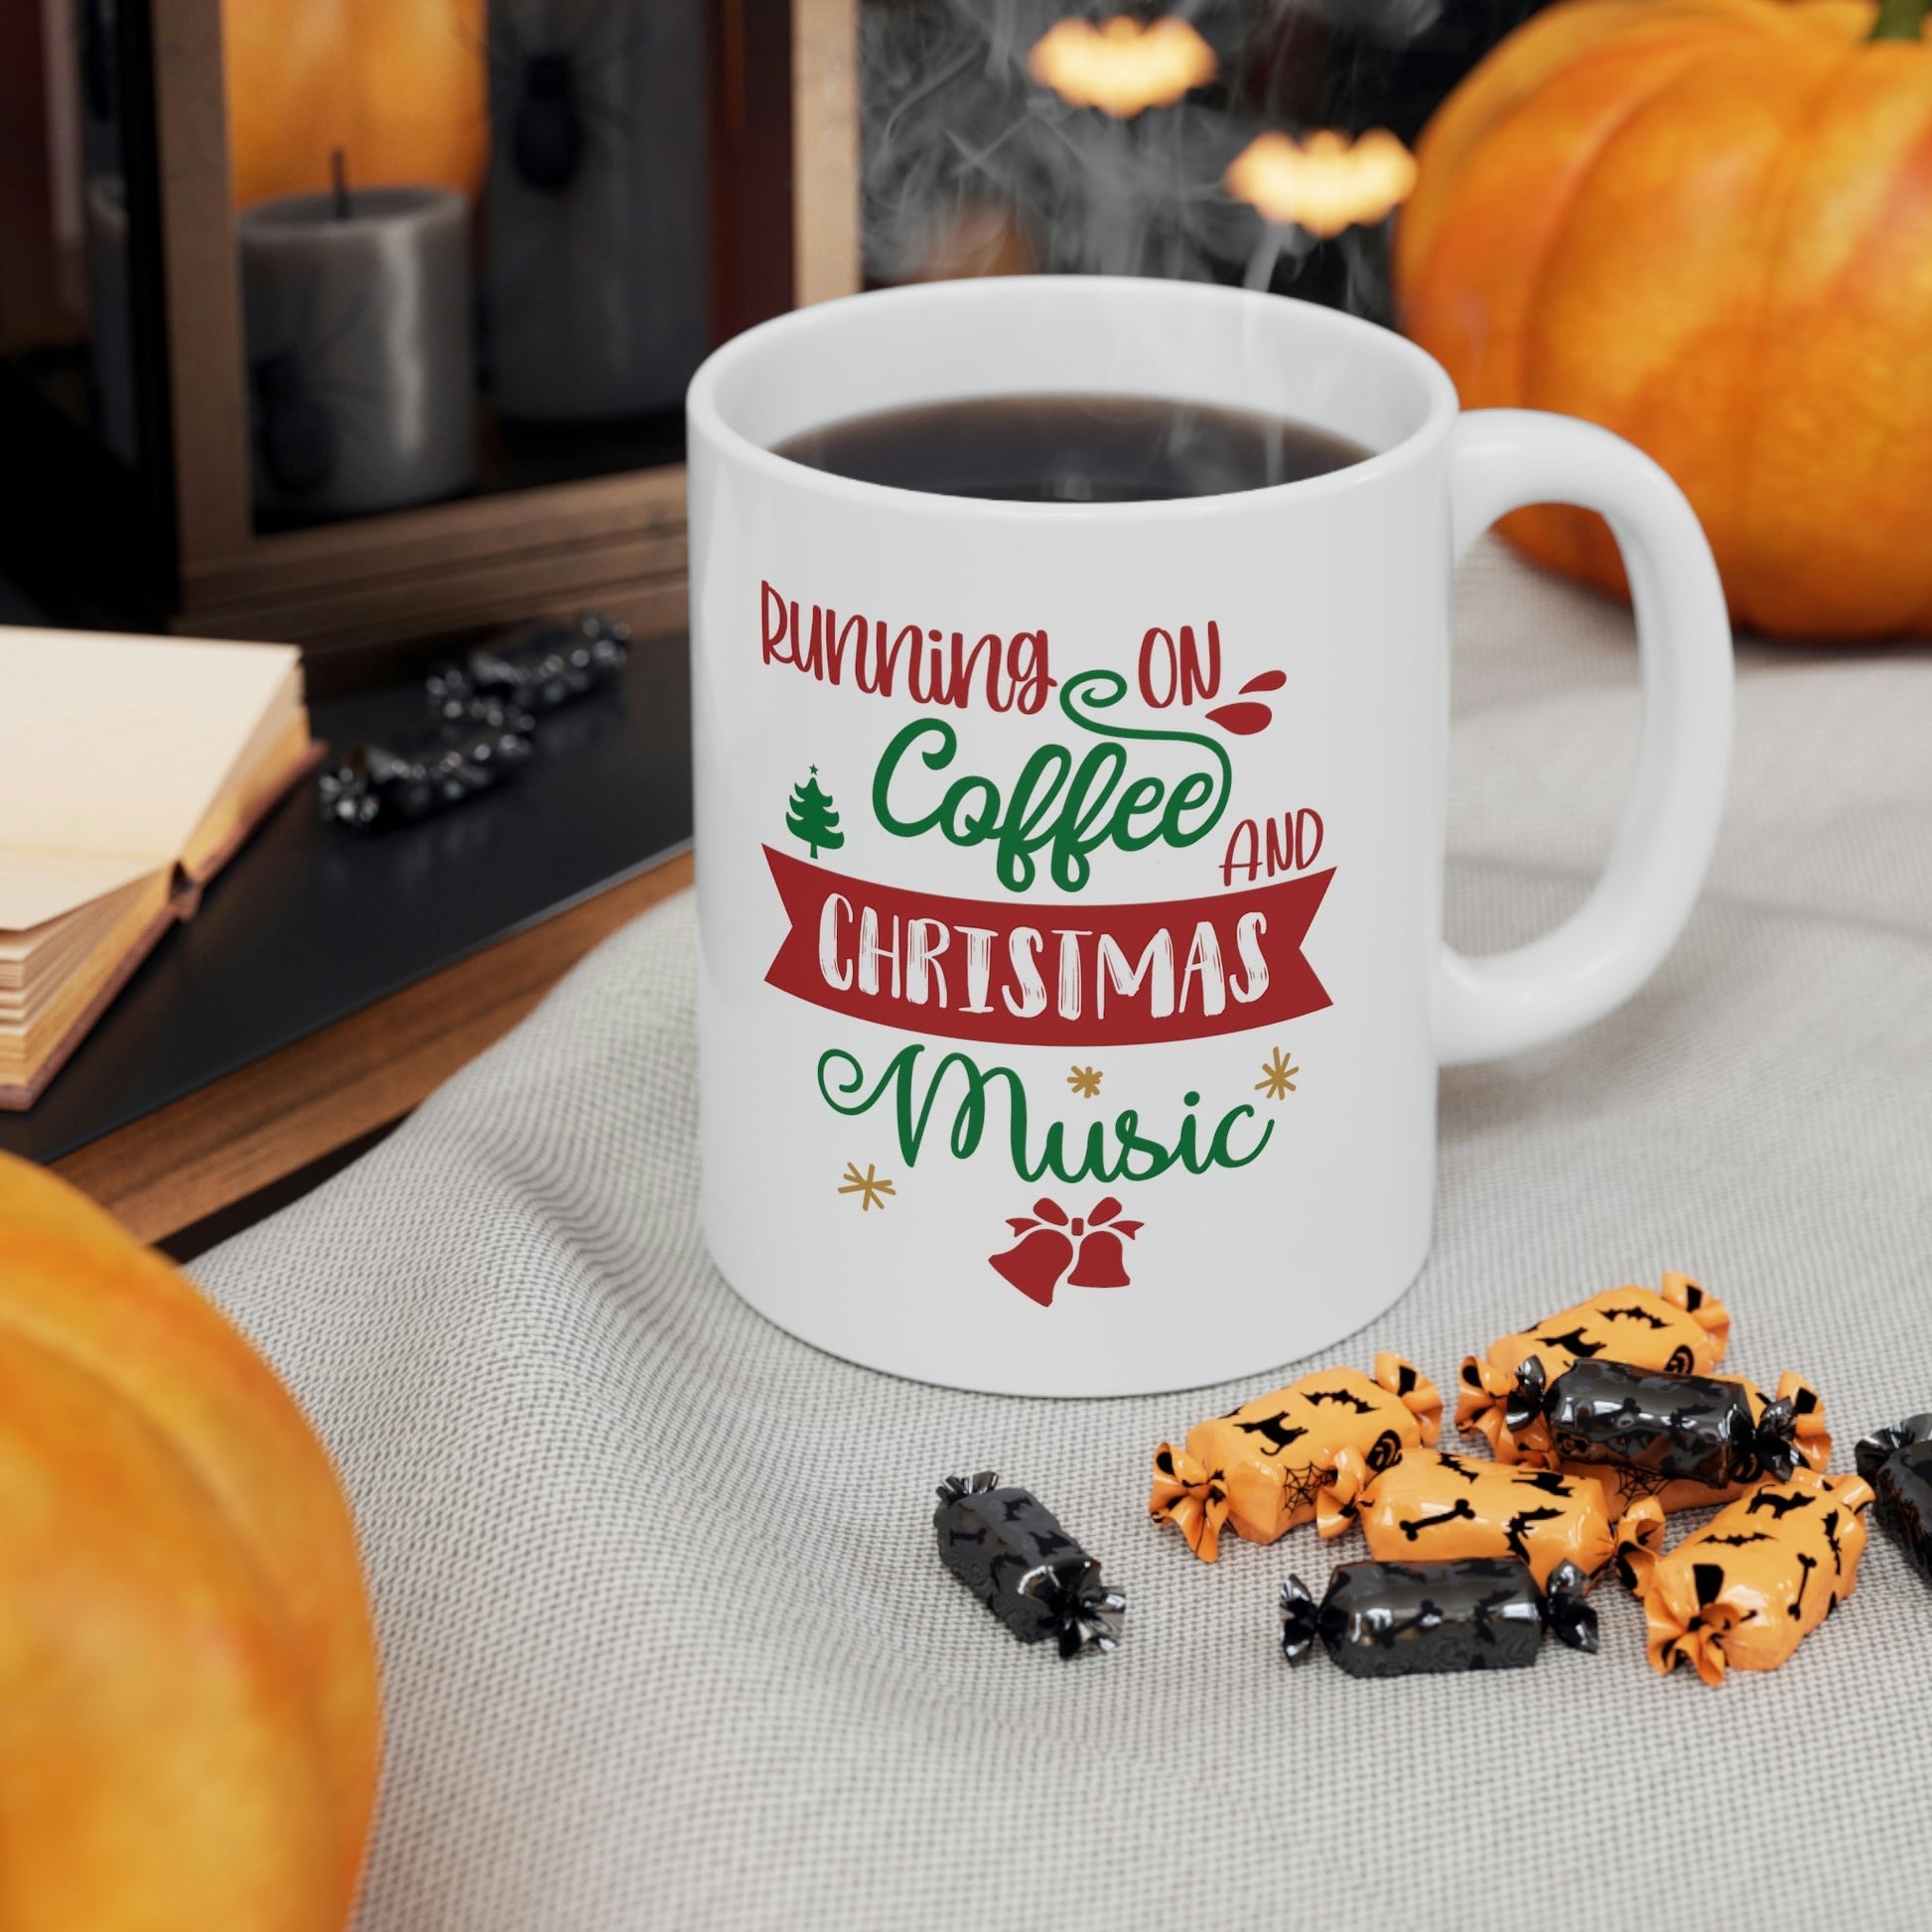 Running On Coffee And Christmas Quotes Music Wishes Ceramic Mug 11oz Ichaku [Perfect Gifts Selection]